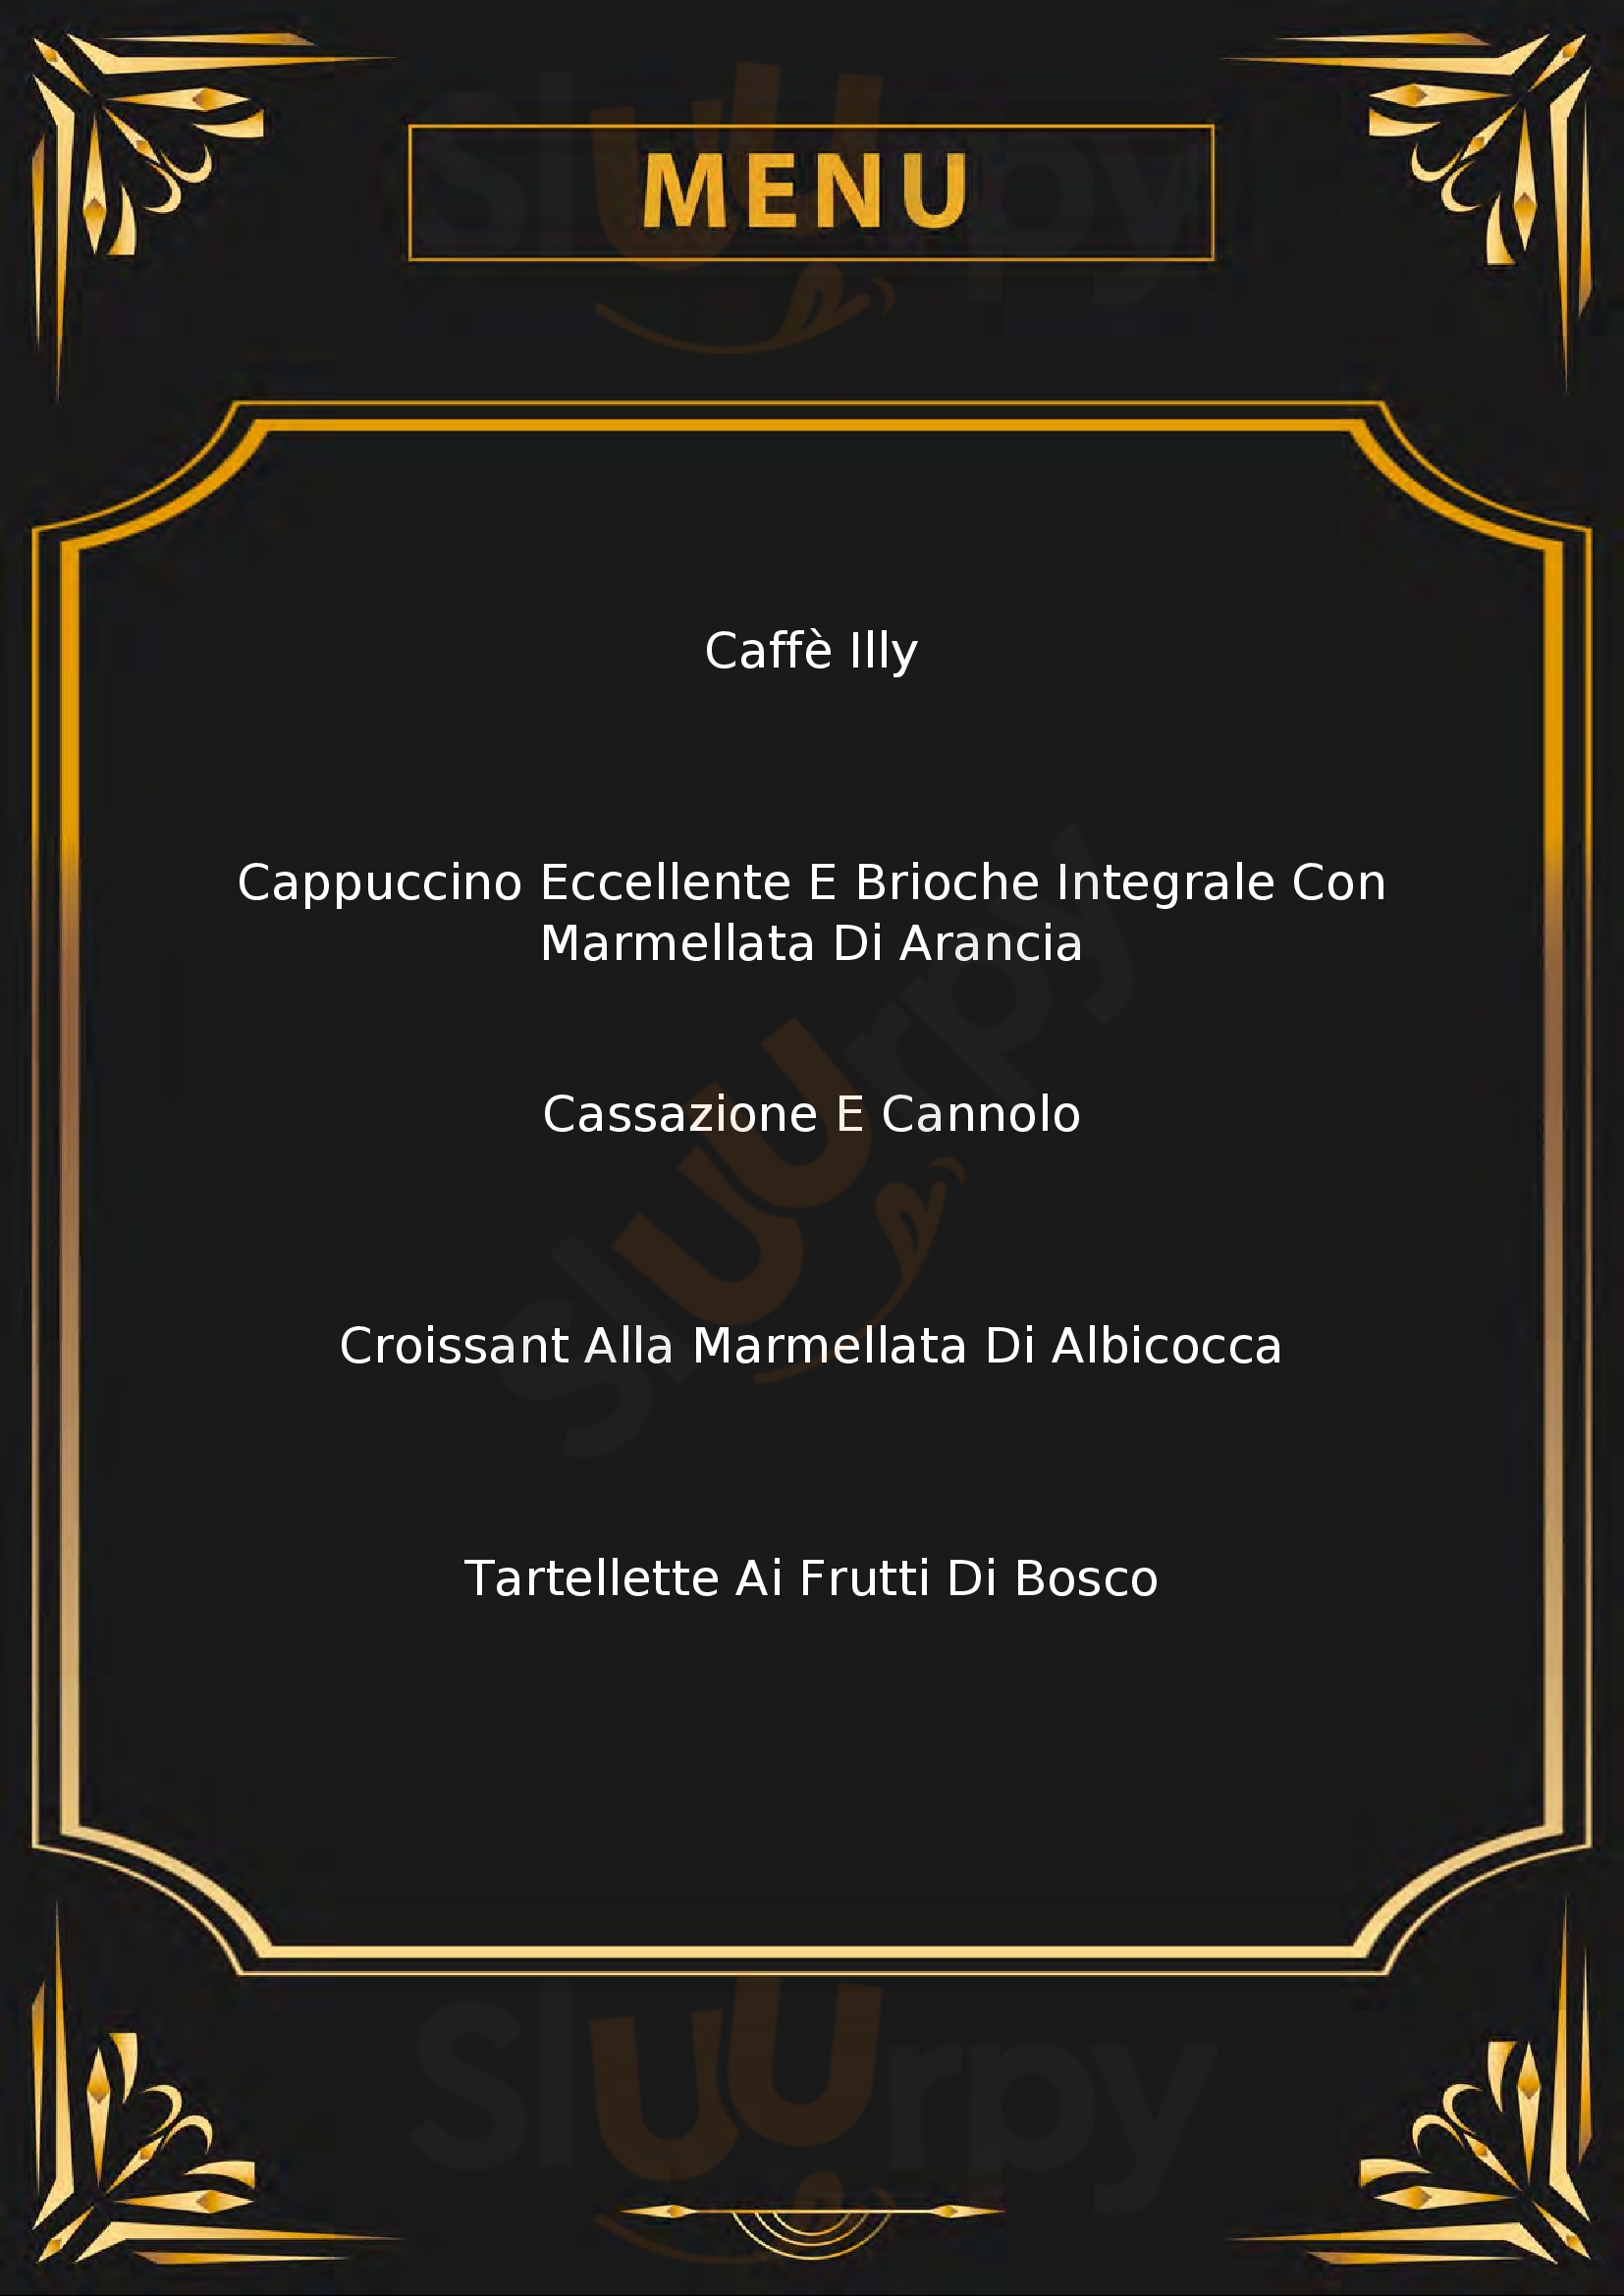 Pasticceria Caffe' Veniani Sas Gavirate menù 1 pagina